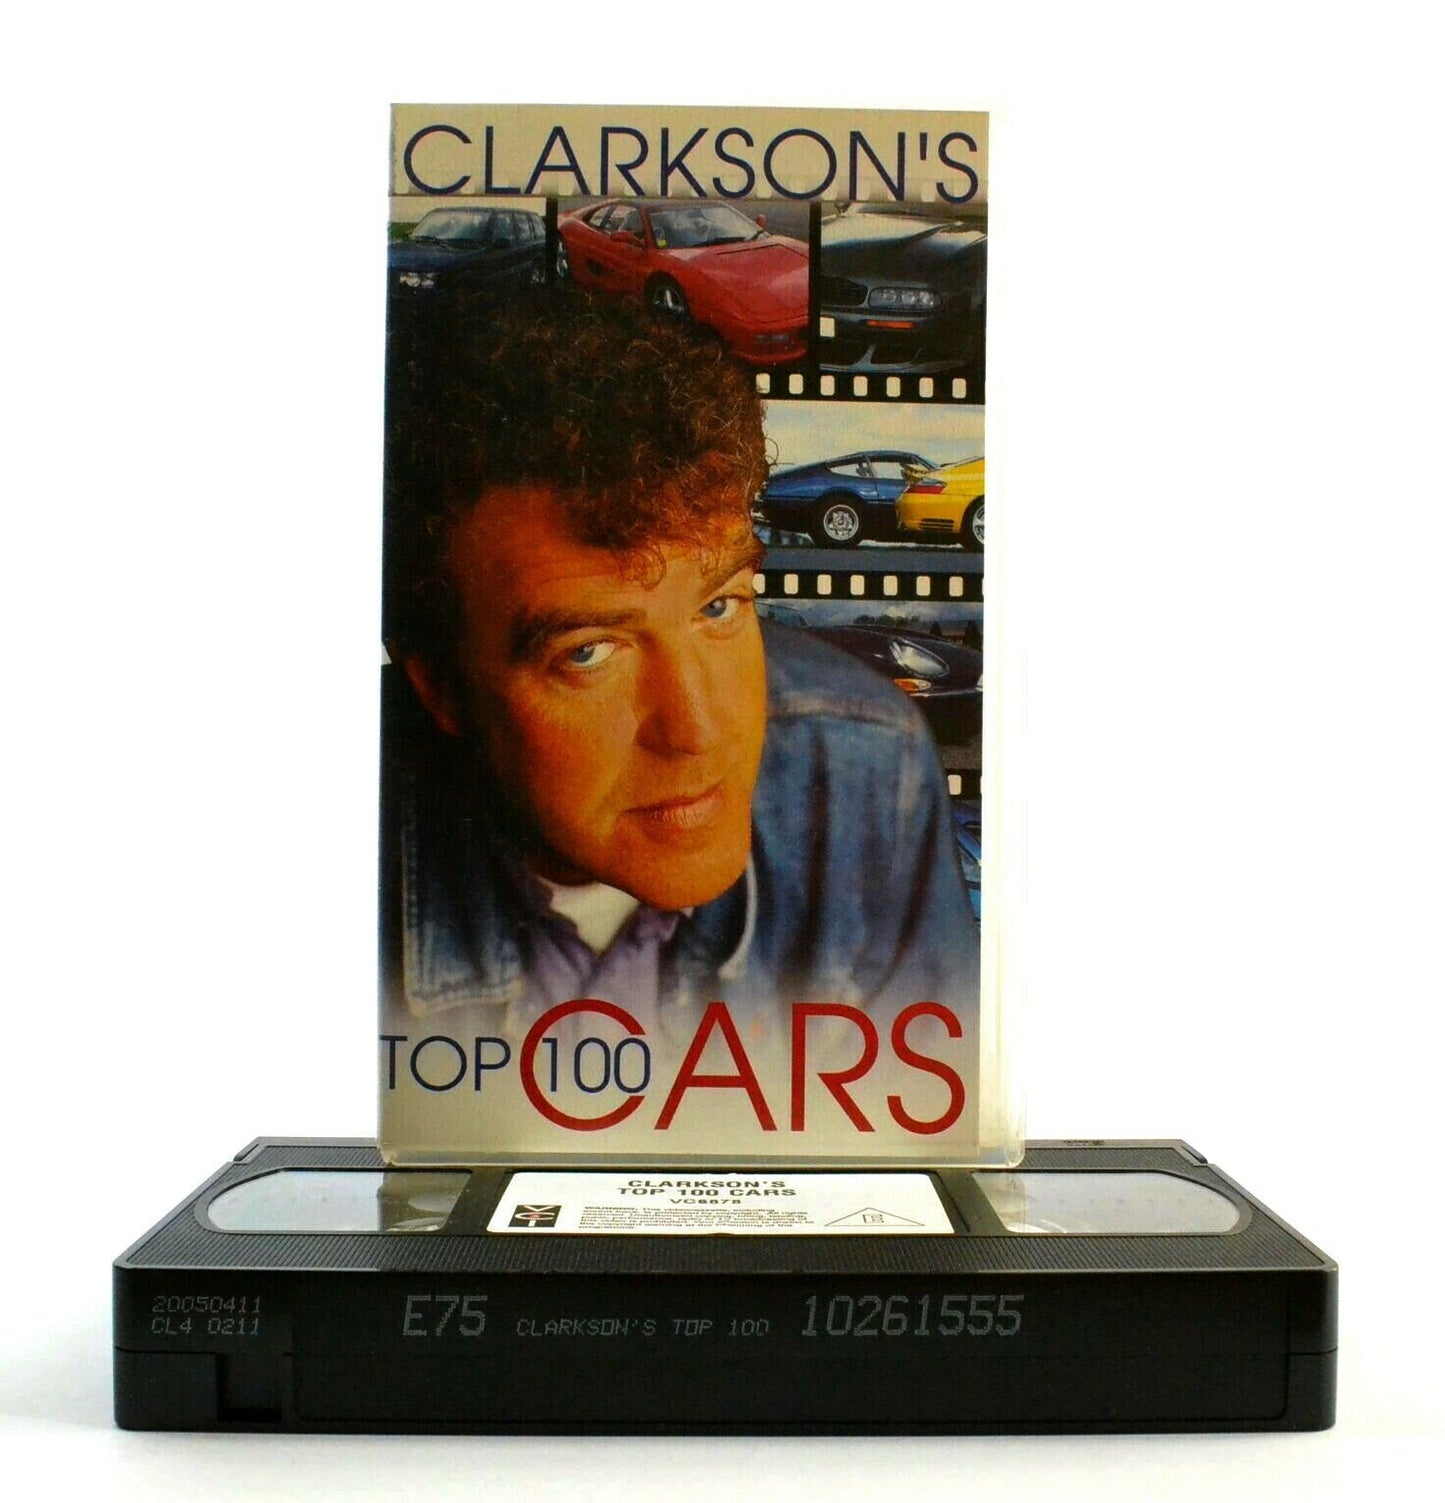 Jeremy Clarkson: Clarkson's Top 100 Cars - Ford Transit - Peugeot 504 - Pal VHS-